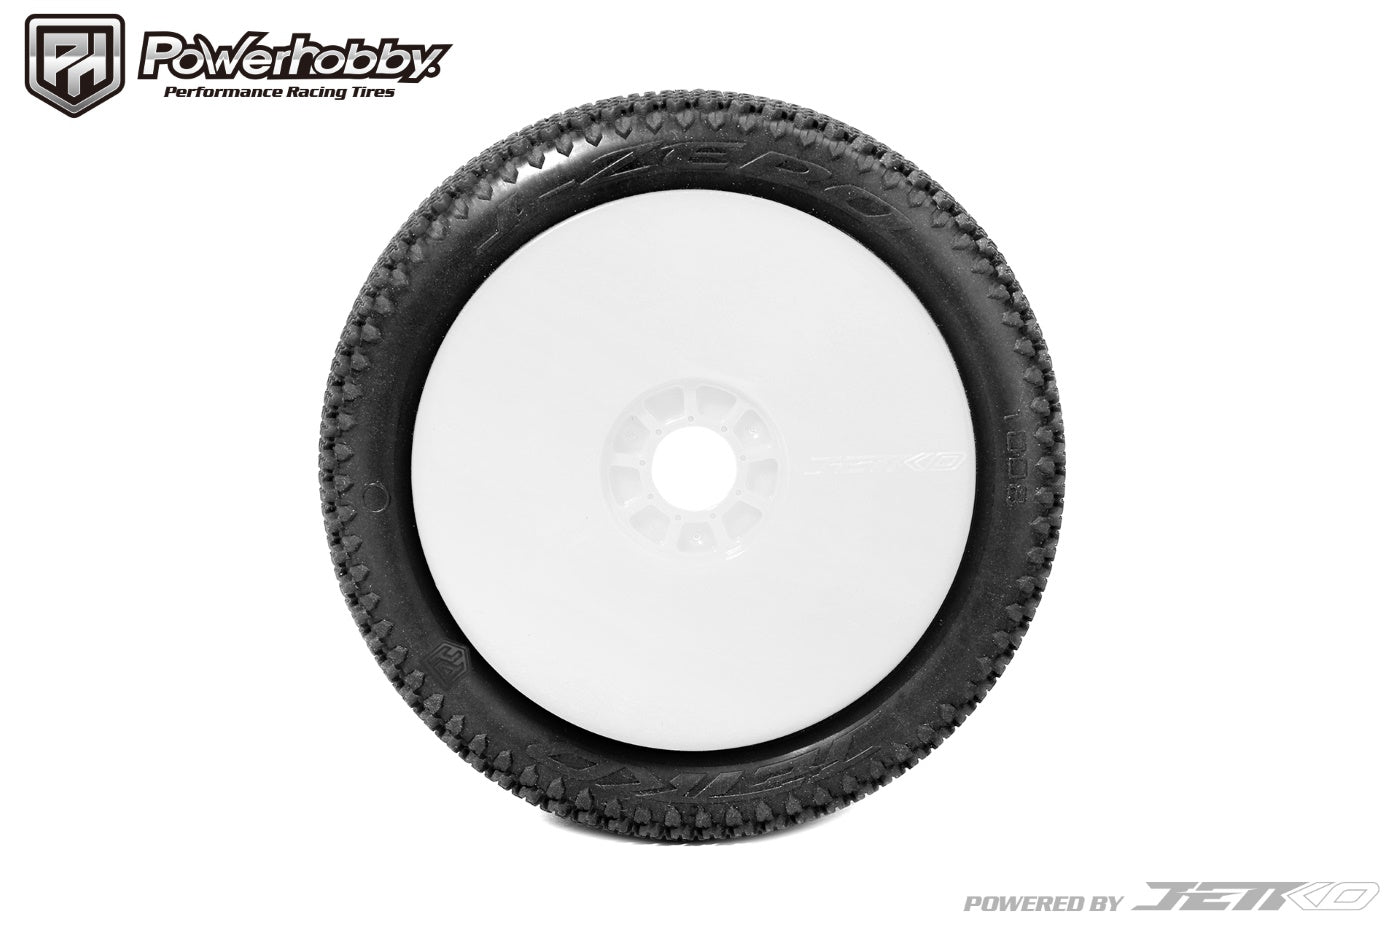 Powerhobby J-Zero 1/8 Buggy Mounted Tires White Dish Wheels (2) Super Soft - PowerHobby